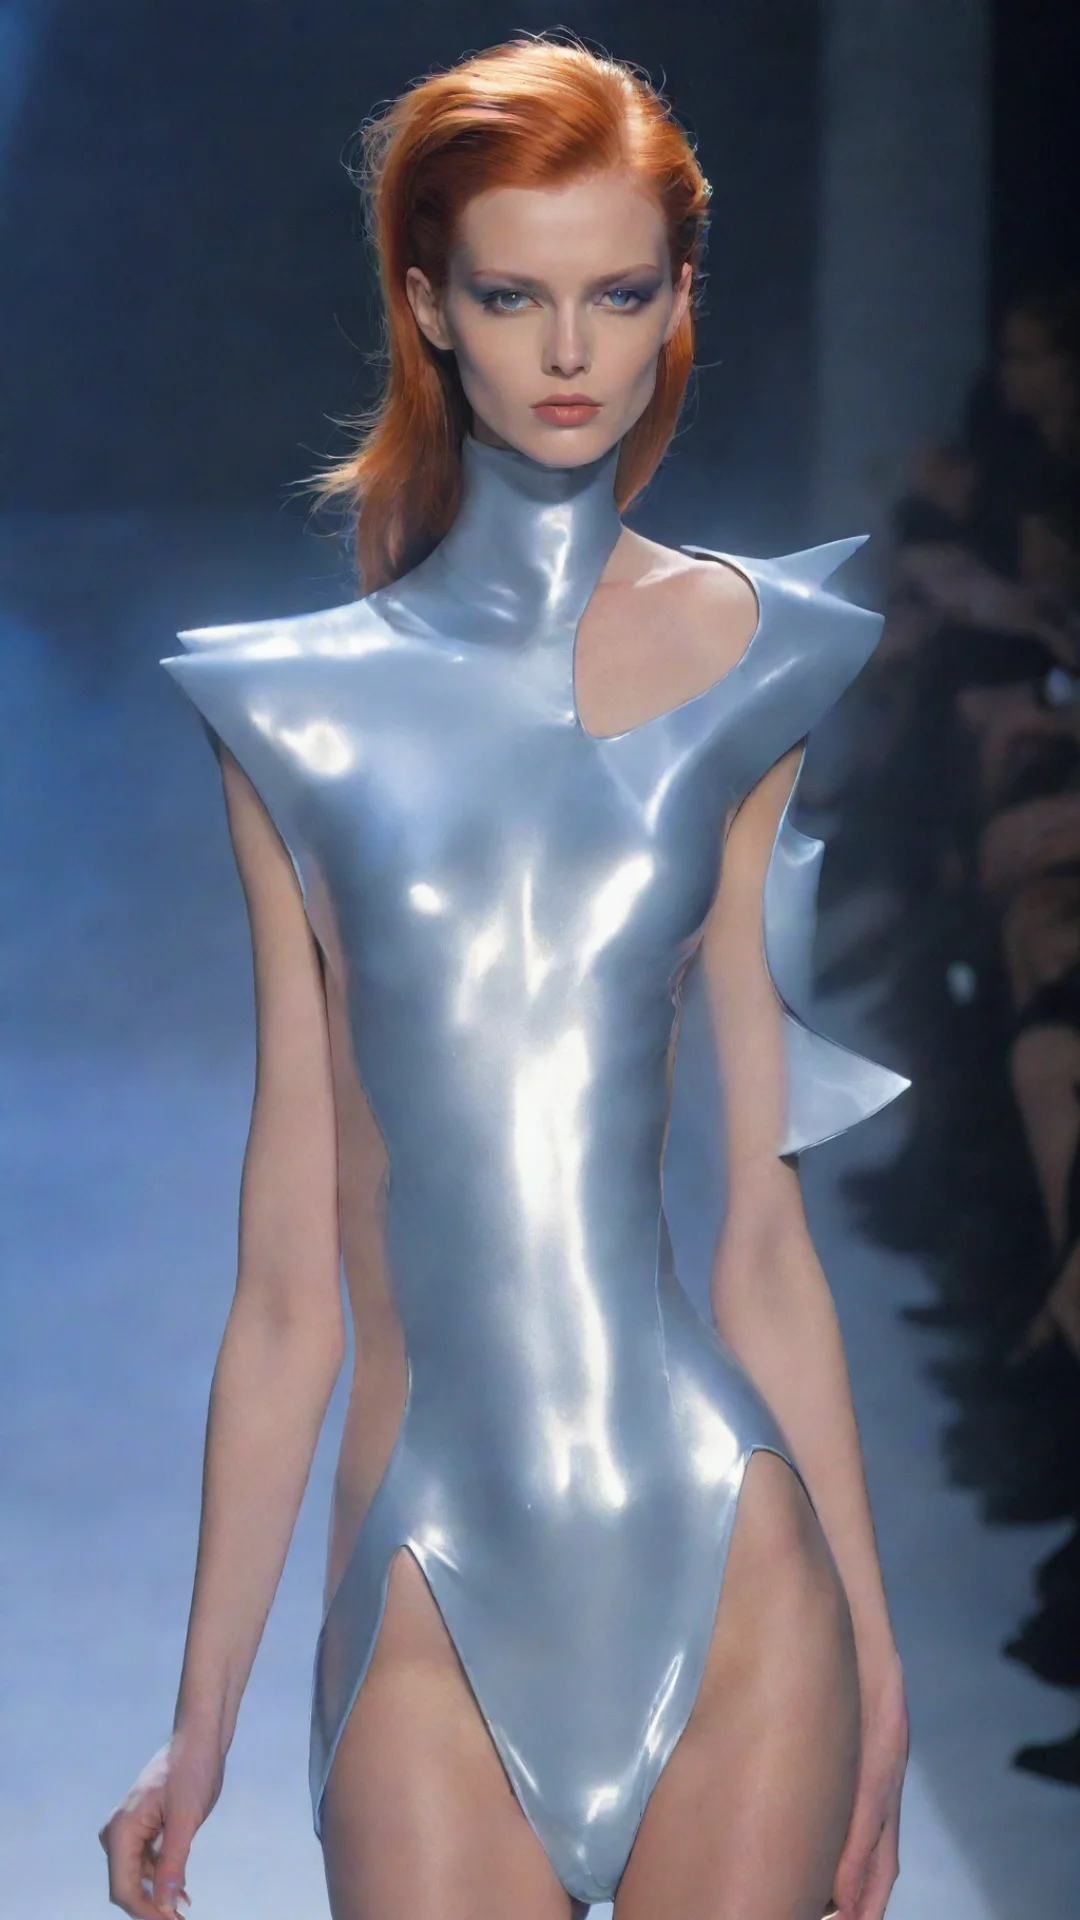 artstation art thierry mugler fashion style futuristic model confident engaging wow 3 tall